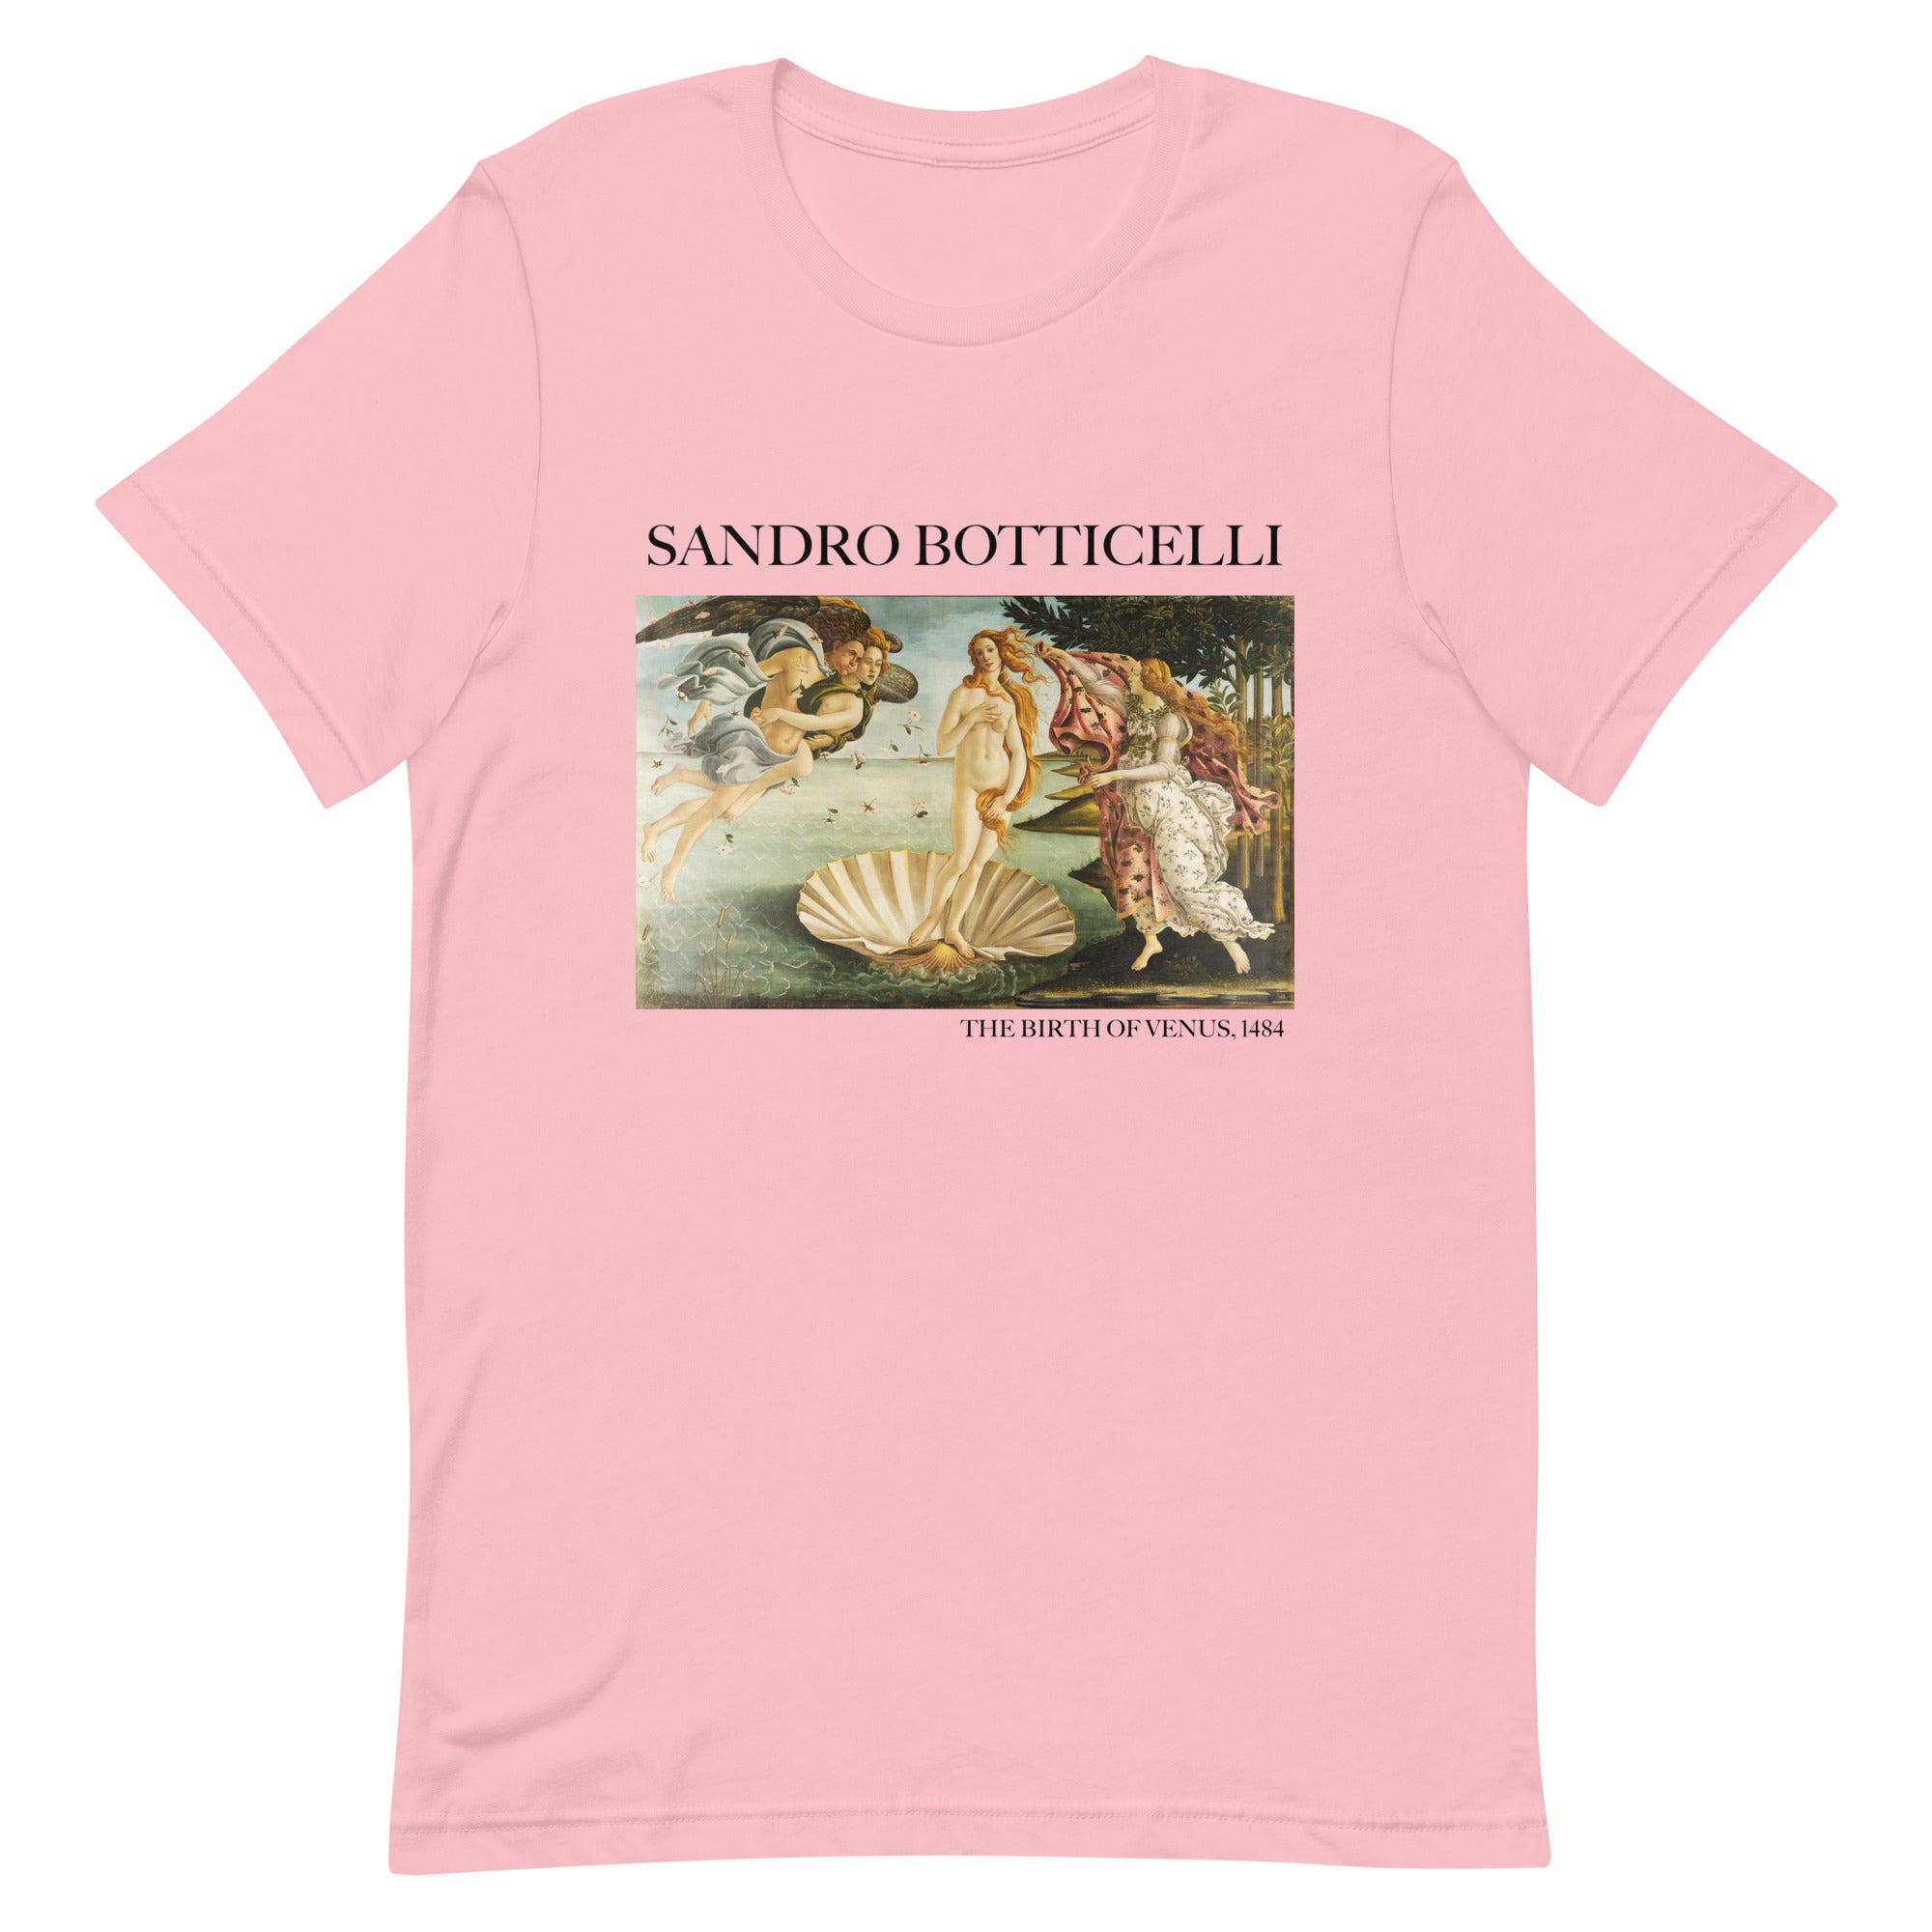 Sandro Botticelli 'The Birth of Venus' Famous Painting T-Shirt | Unisex Classic Art Tee